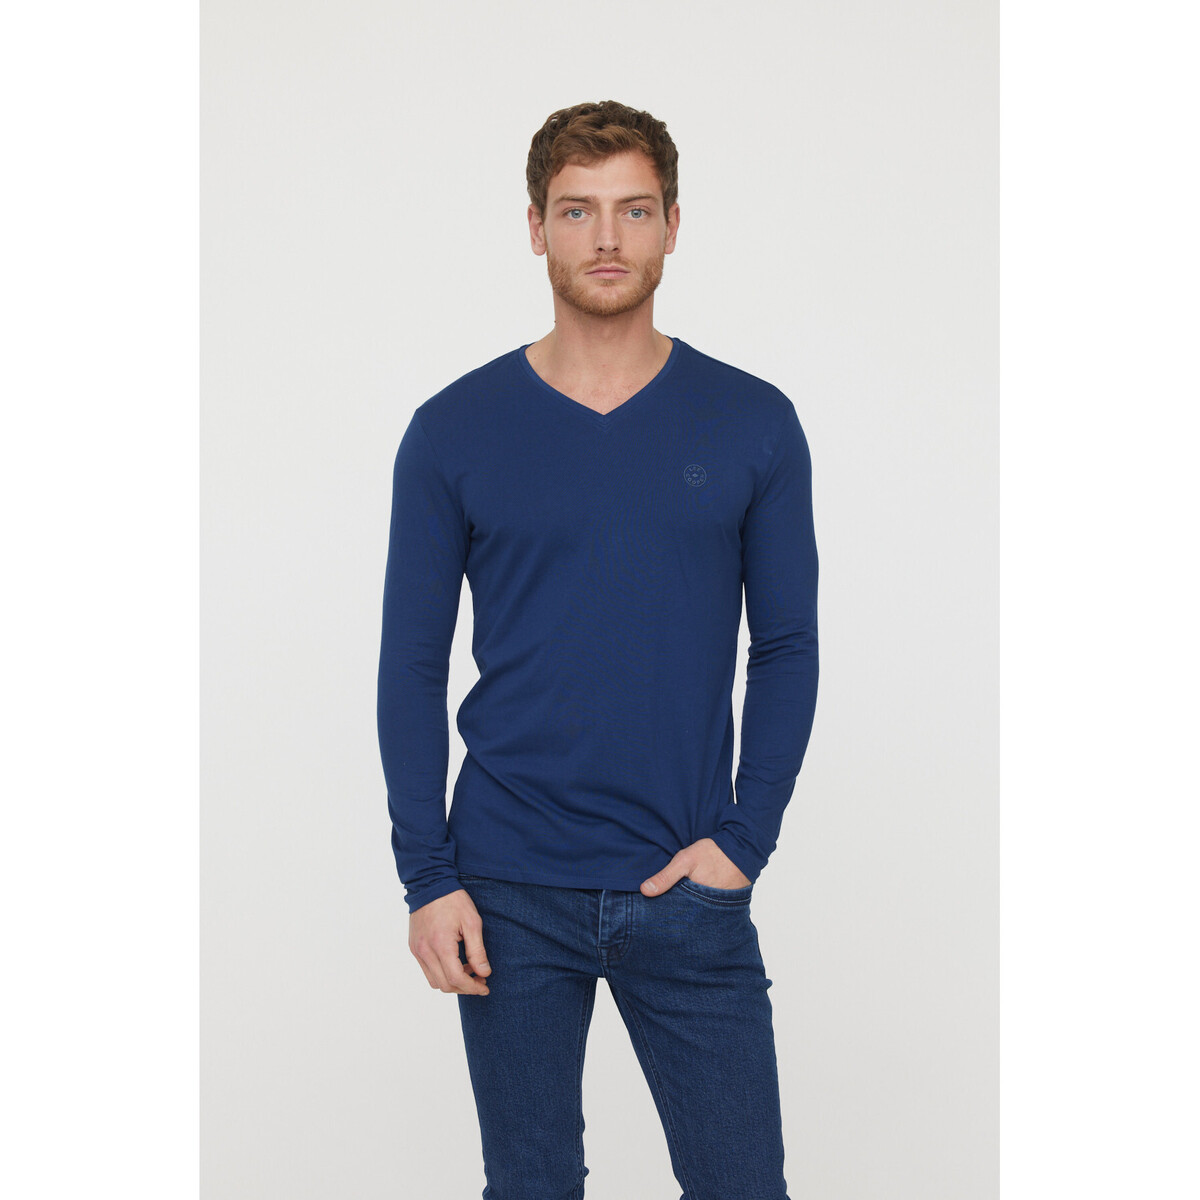 Vêtements Homme hoodie with screen print T-shirt Ajessy Gris Chiné ML Bleu